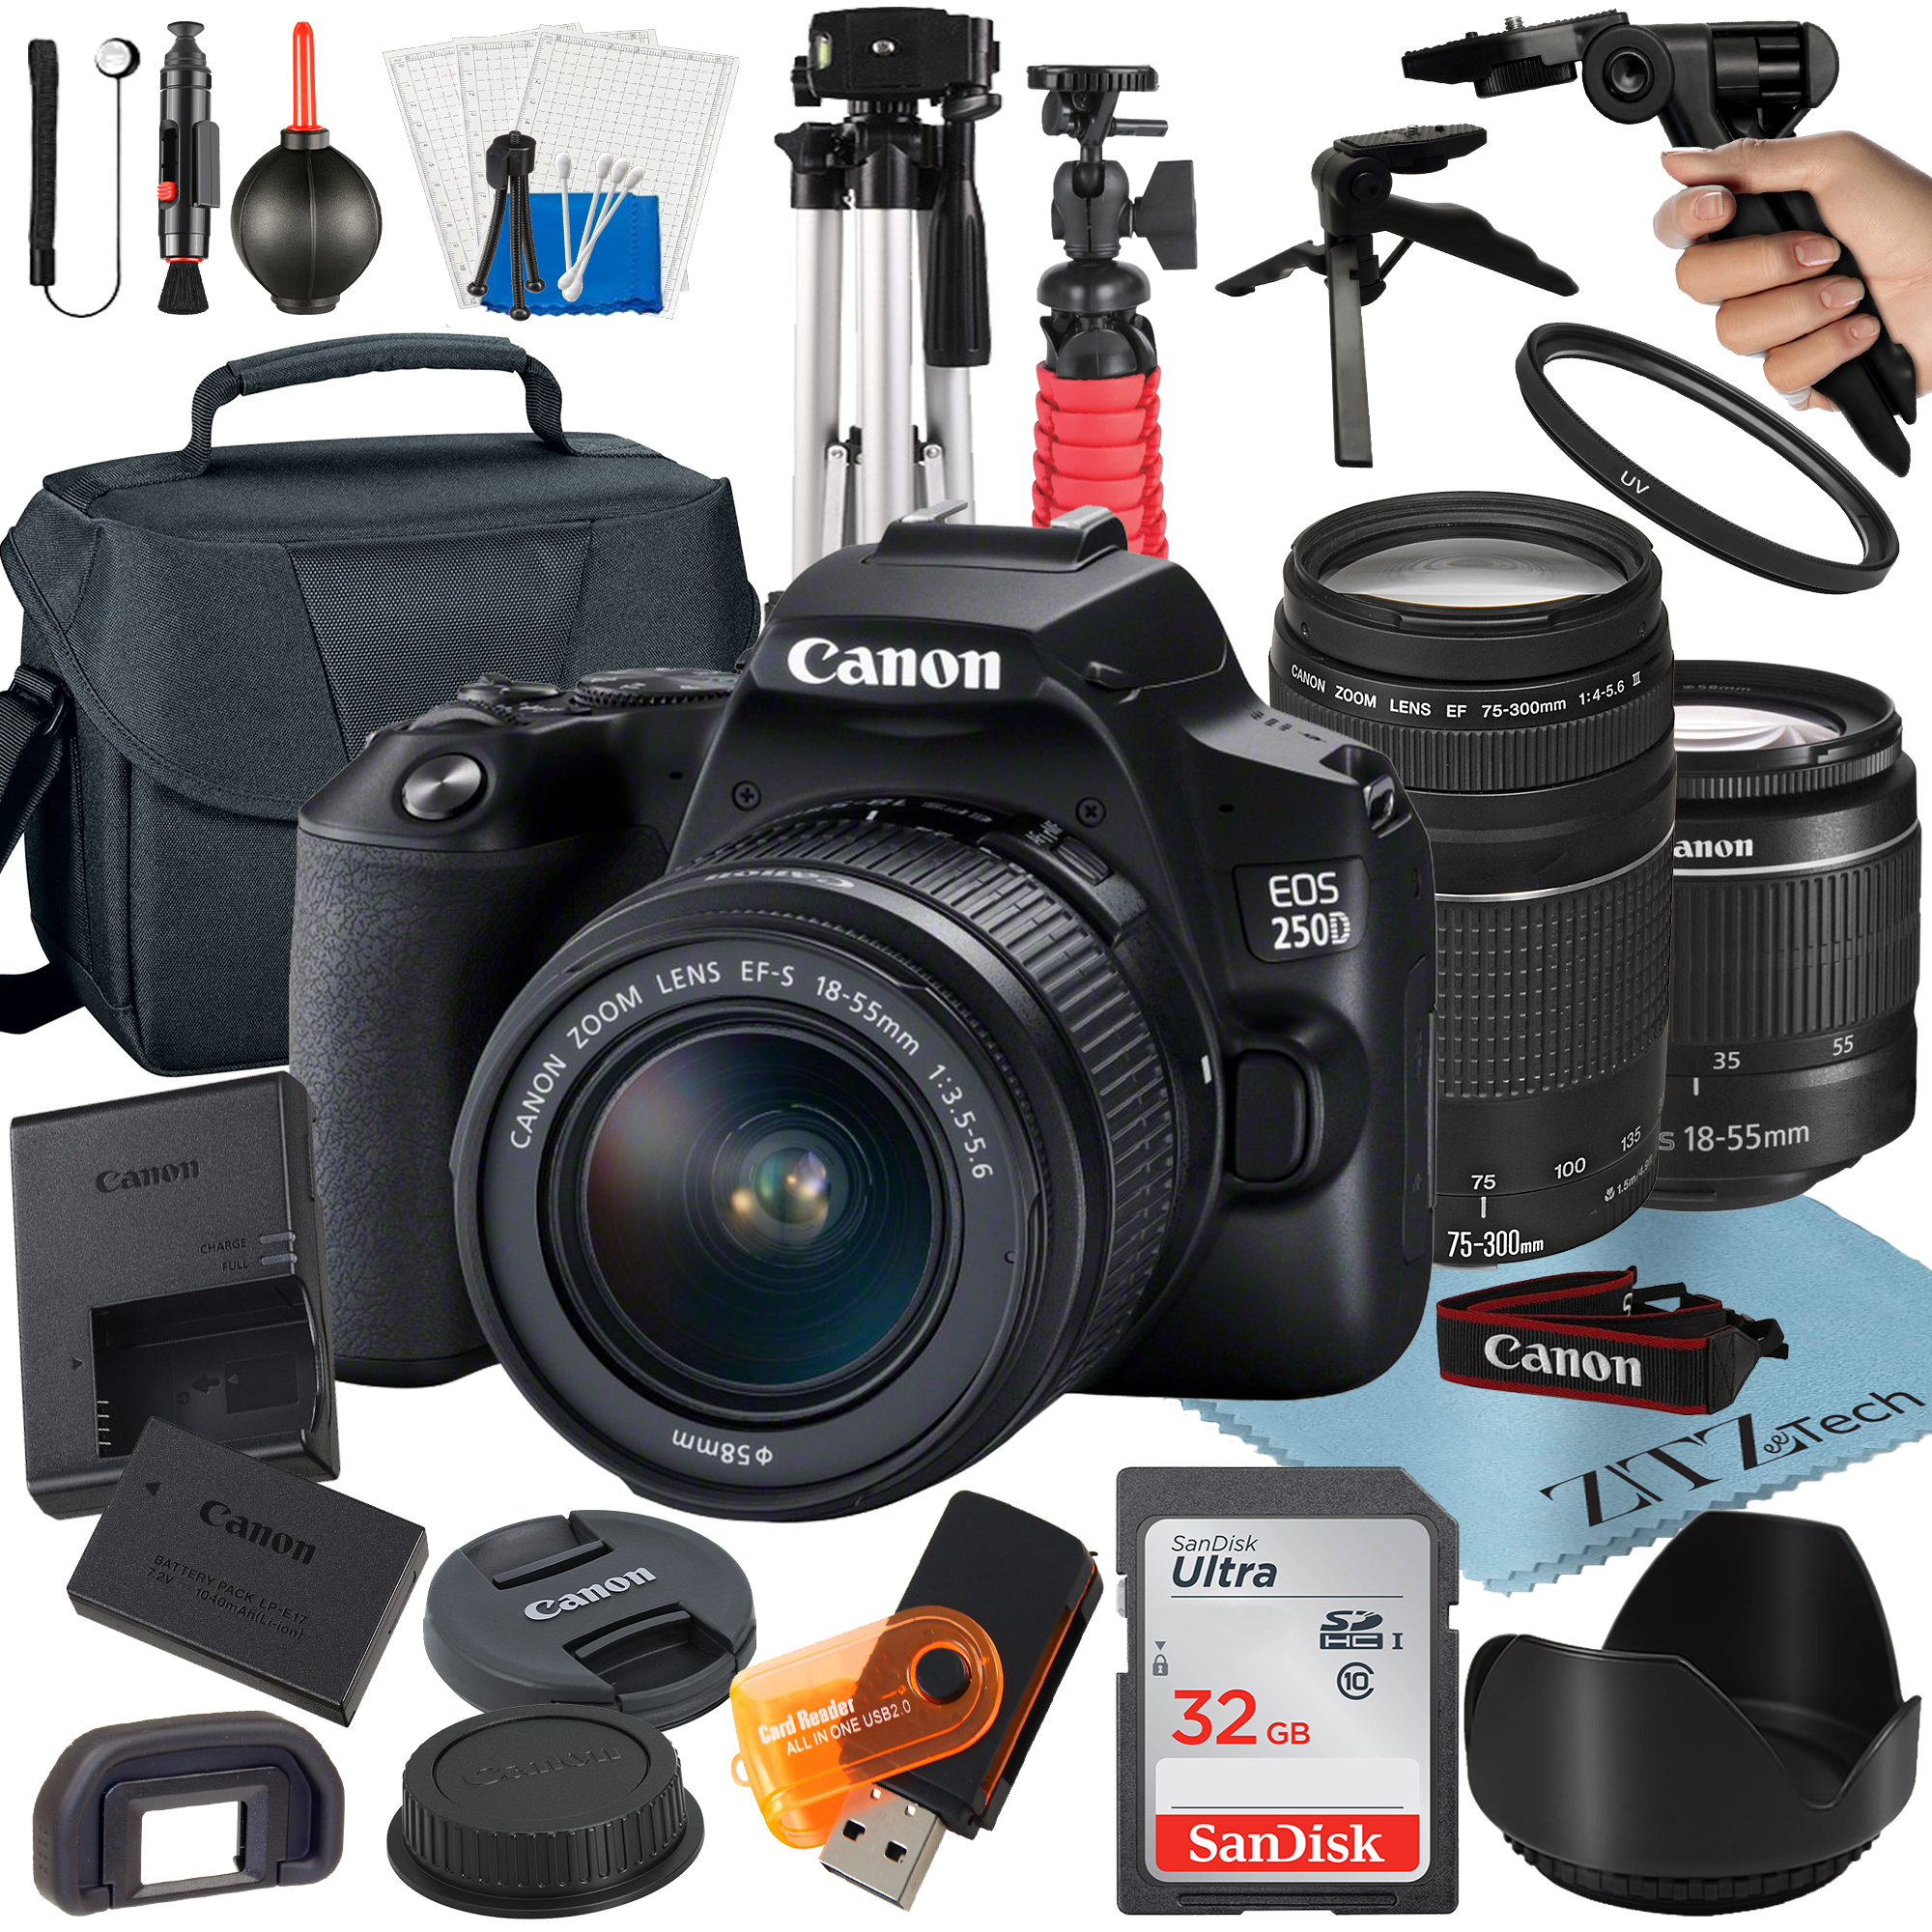 Canon EOS 250D / Rebel SL3 DSLR Camera Bundle with 18-55mm + 75-300mm Lens + 32GB SanDisk Card + Case + Tripod + ZeeTech Accessory